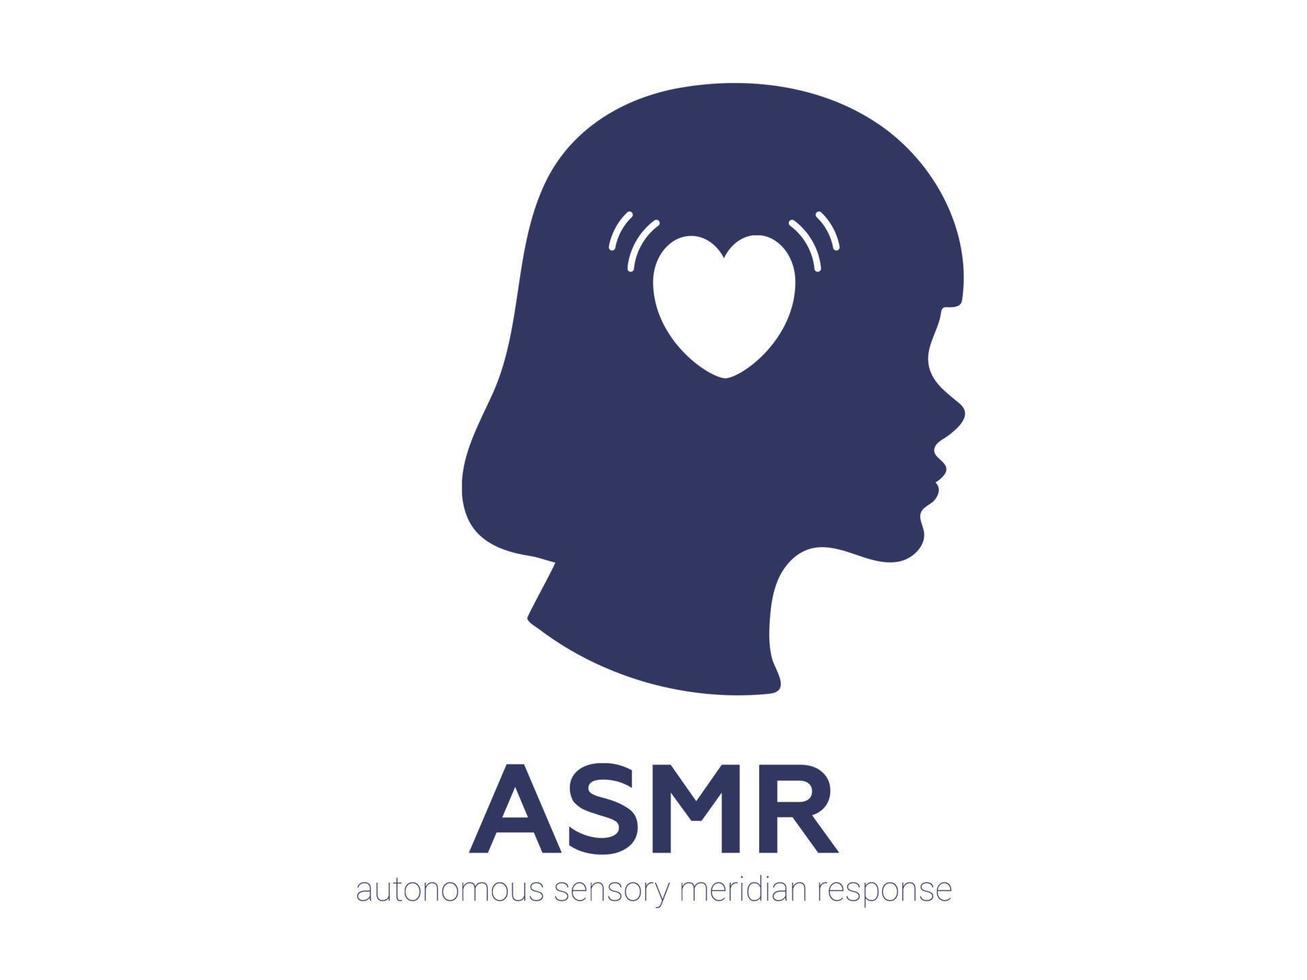 Autonomous sensory meridian response, ASMR logo or icon. Female head profile with heart shaped headphones, enjoying sounds, whisper or music. Vector illustration flat line style